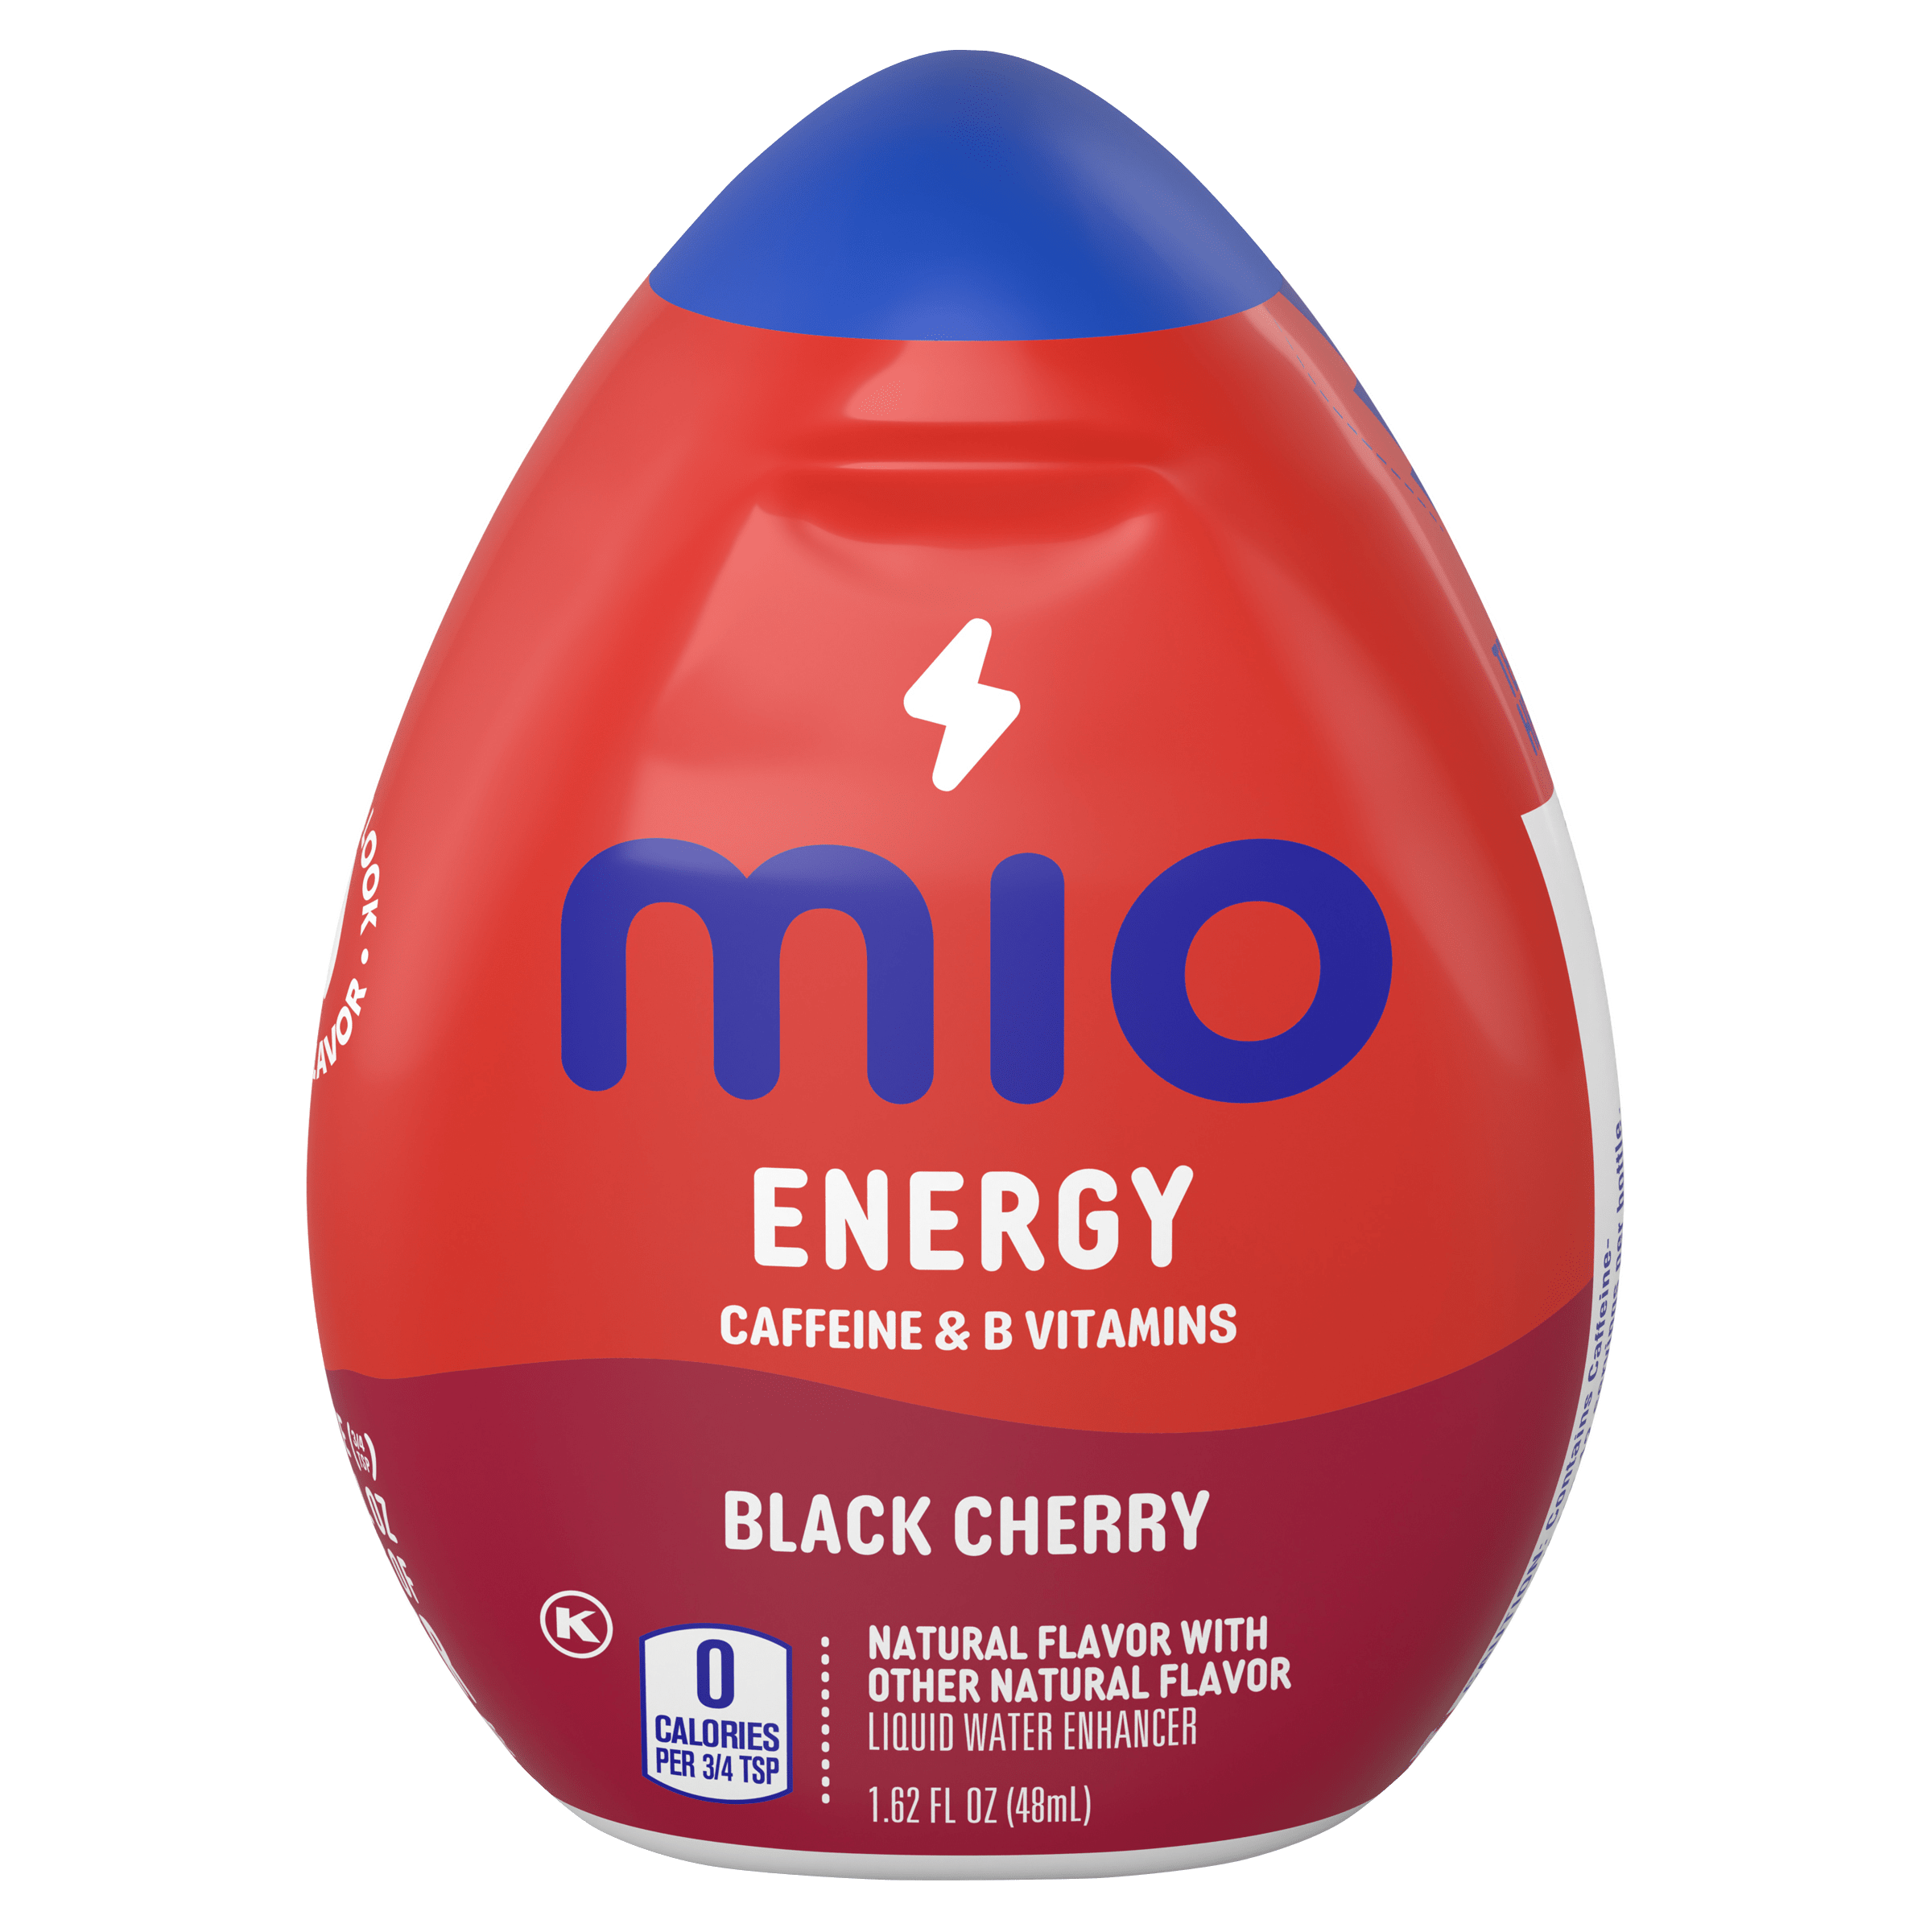 Black Cherry Naturally Flavored Liquid Water Enhancer with Caffeine & B Vitamins